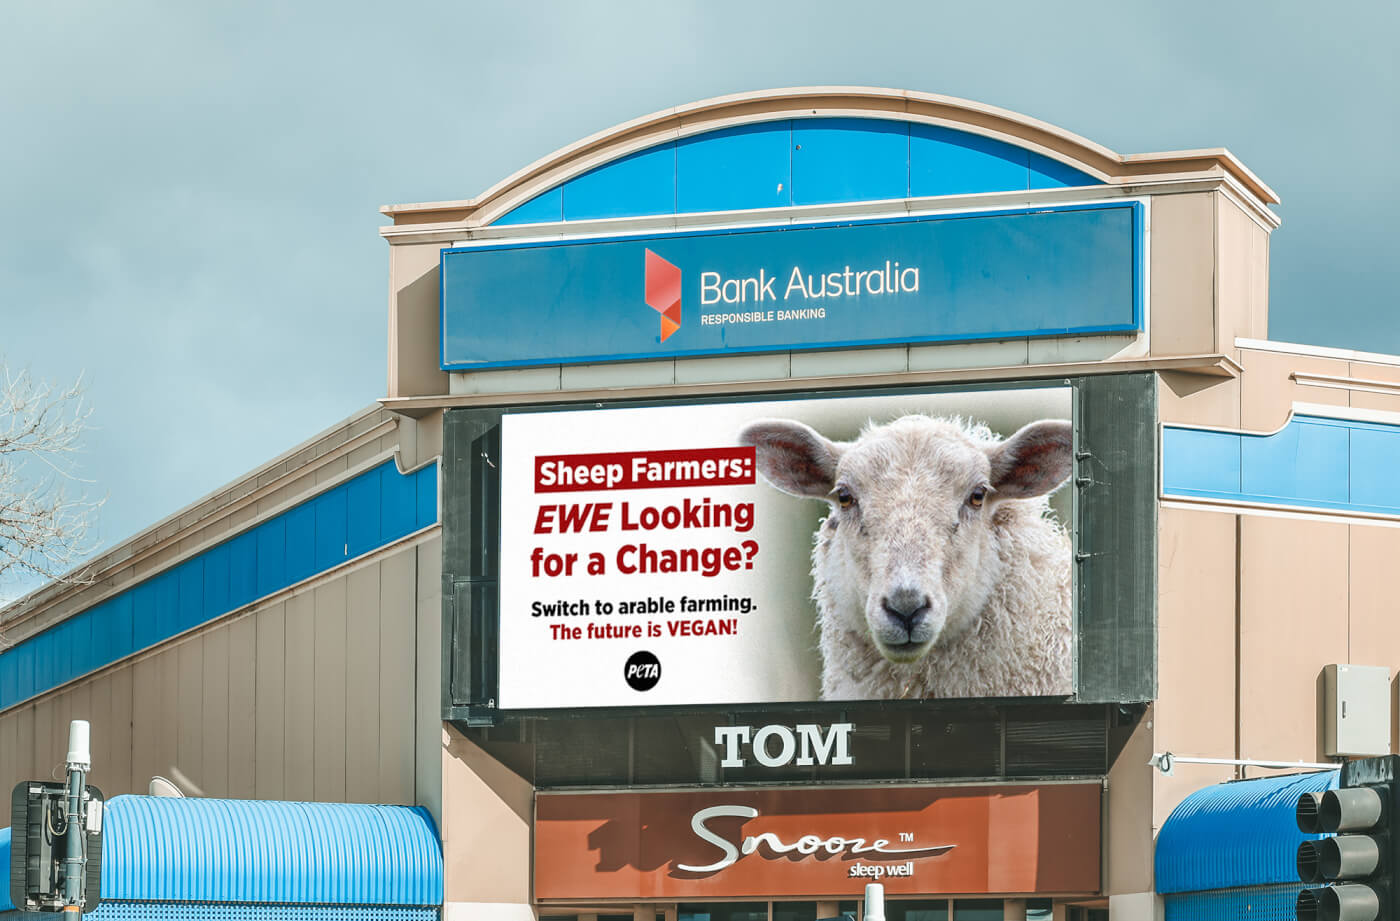 Bendigo Billboards Urge Sheep Farmers to ‘Baack’ Away From Animal Agriculture